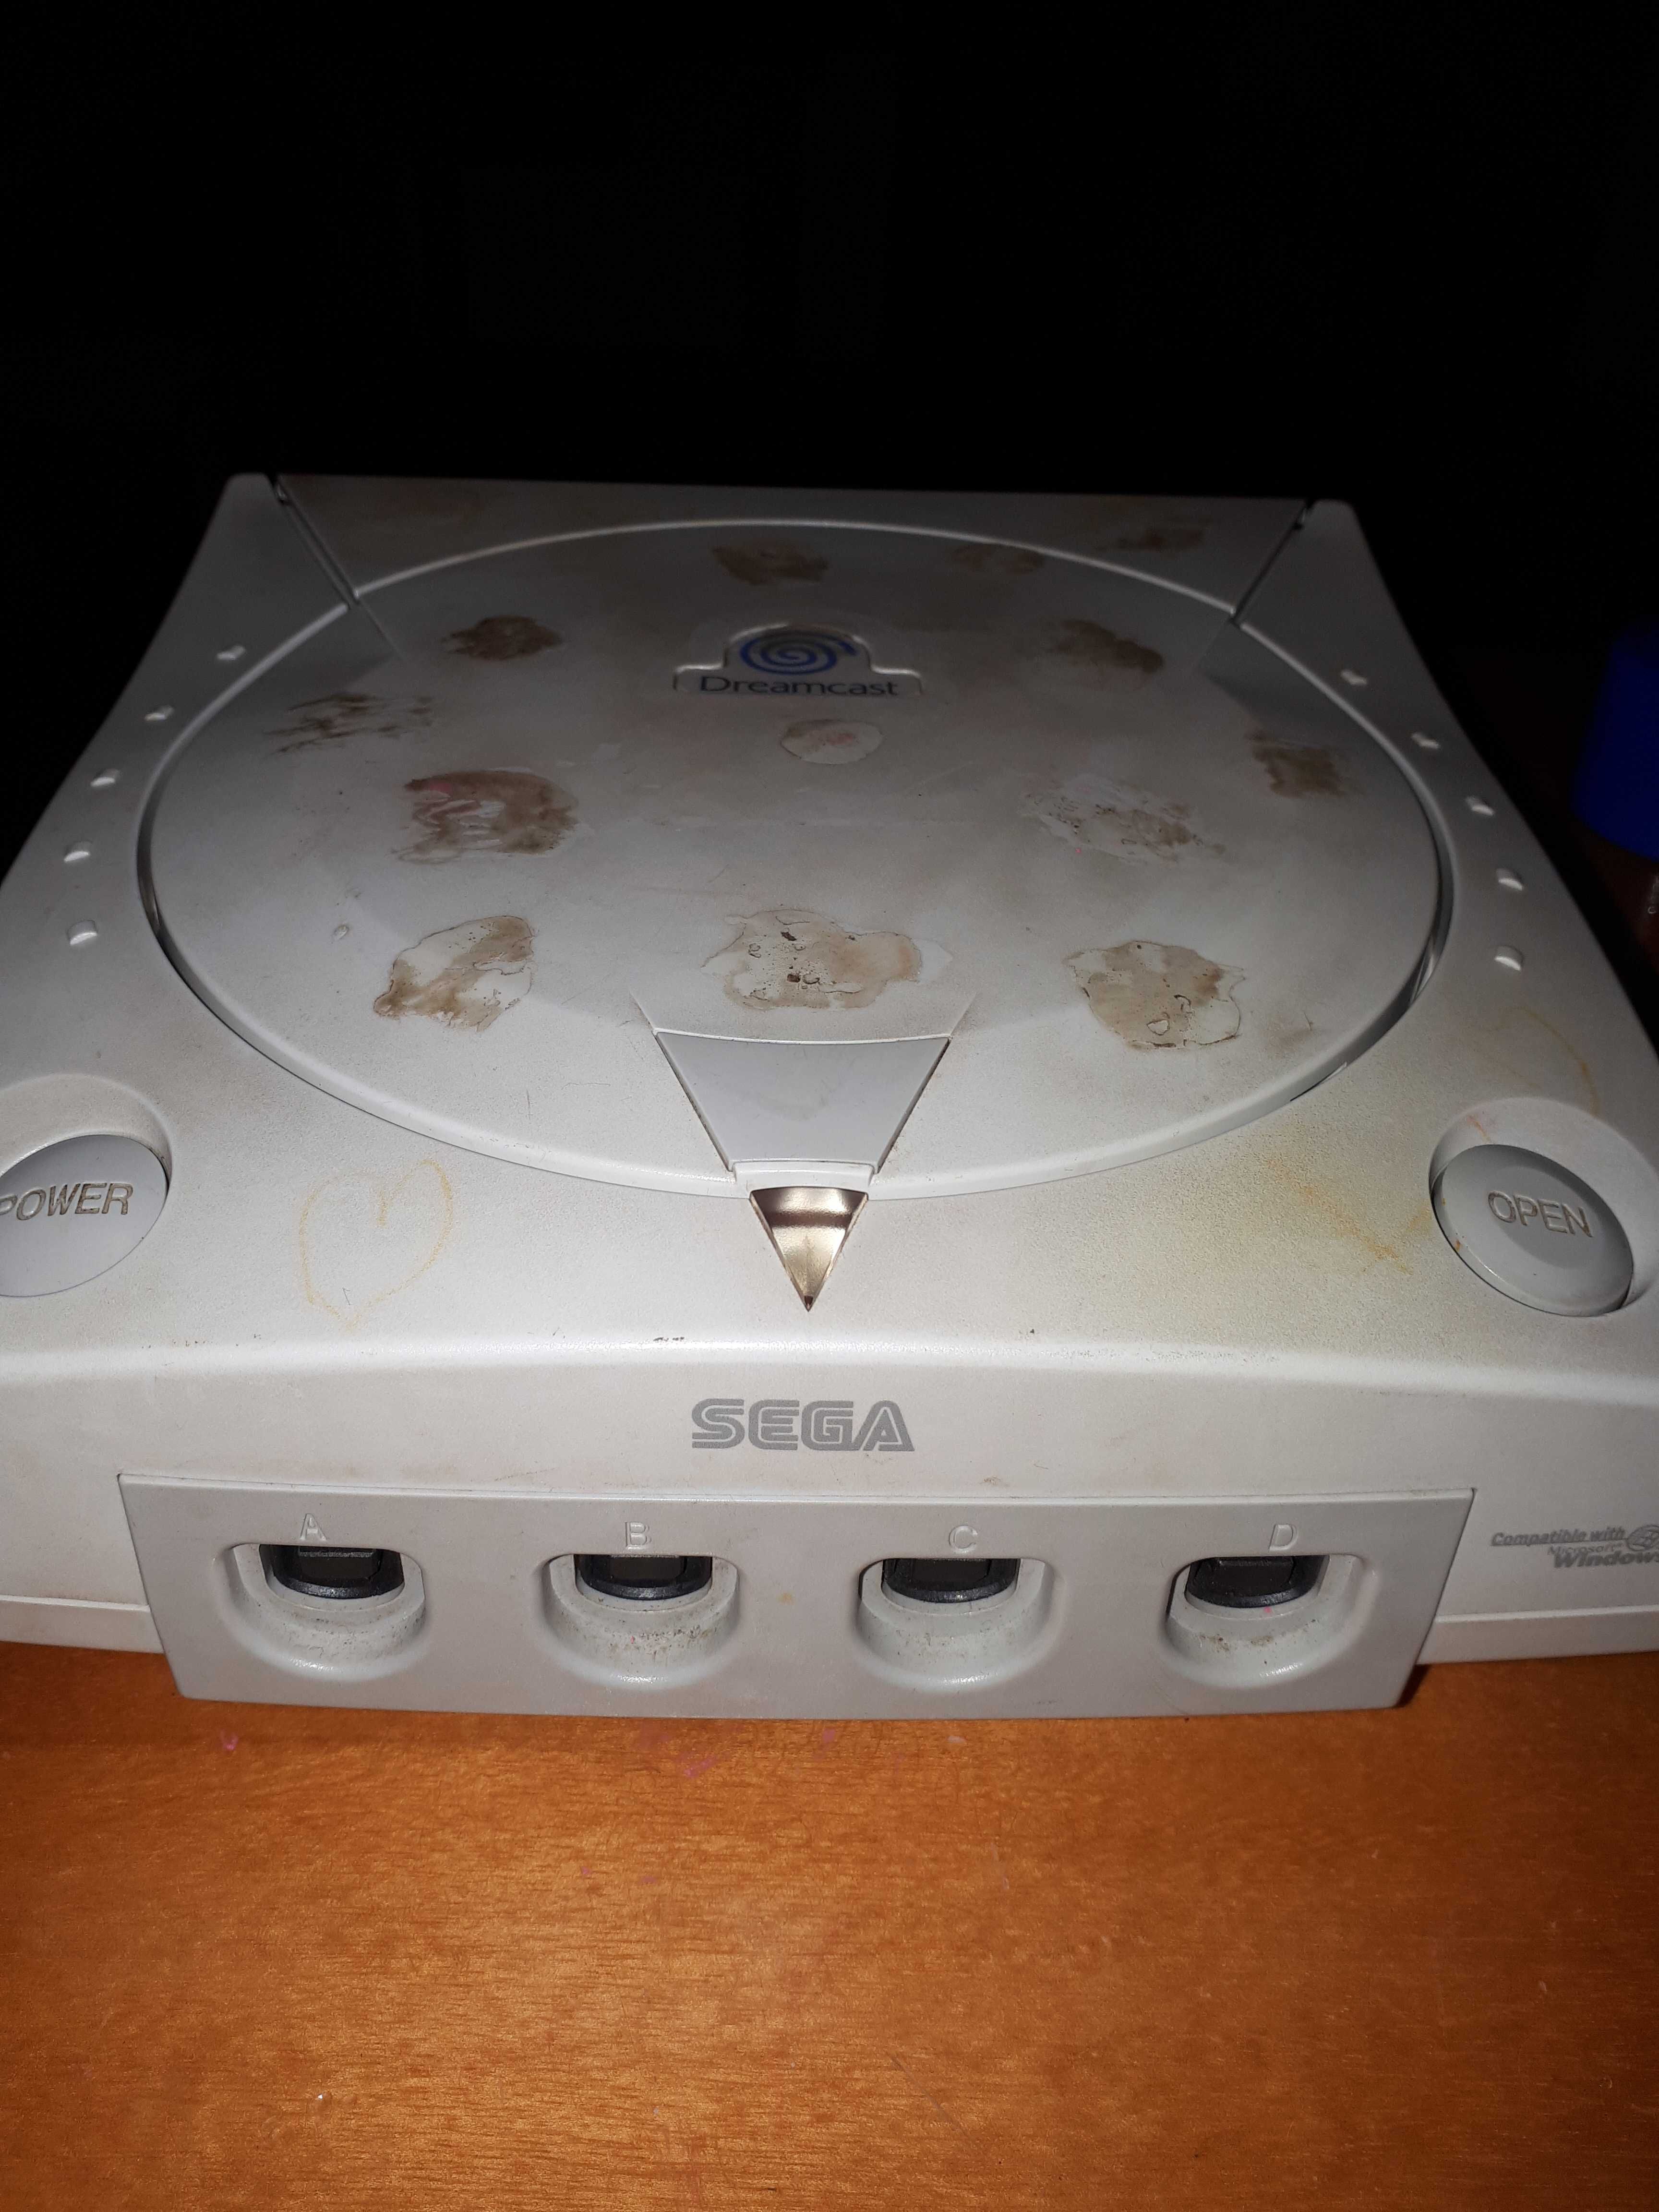 Consola Dreamcast HKT-3030